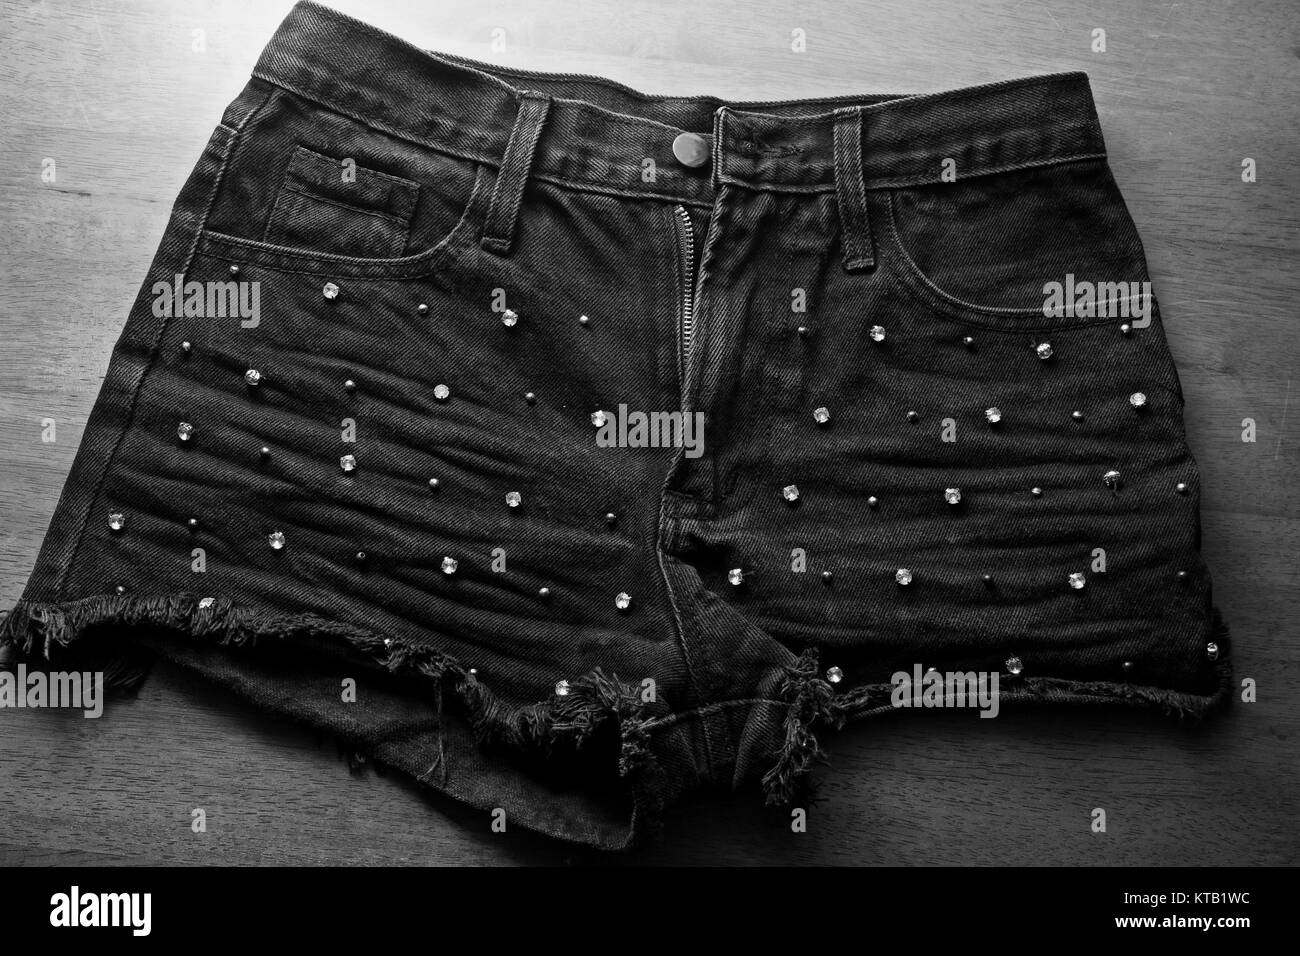 https://c8.alamy.com/compes/ktb1wc/jeans-dama-moda-disparos-detalle-de-diamante-negro-blanco-ktb1wc.jpg